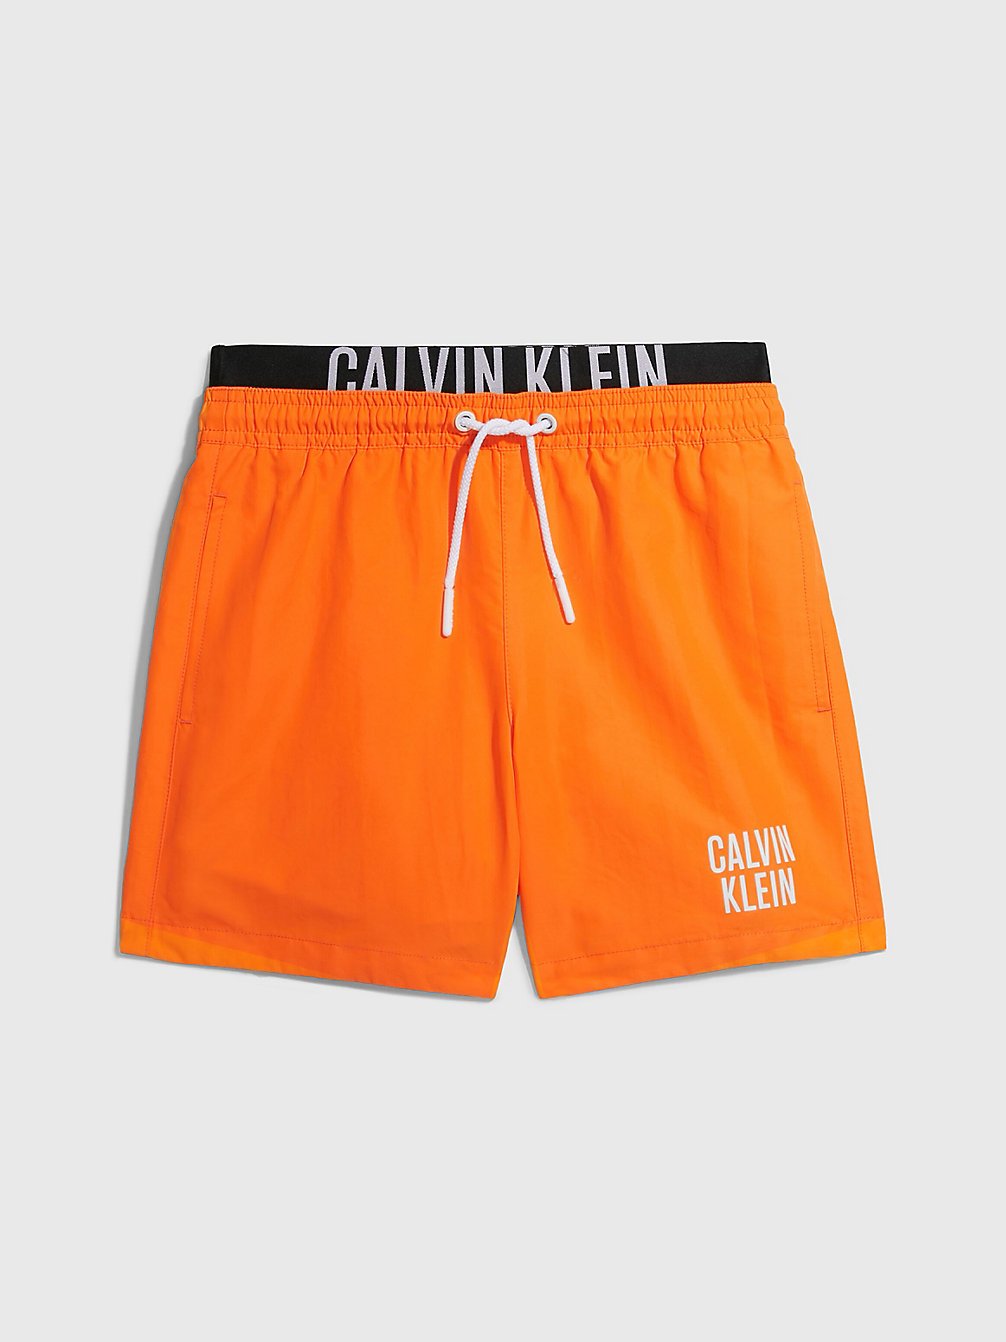 SUN KISSED ORANGE > Boys Swim Shorts - Intense Power > undefined boys - Calvin Klein